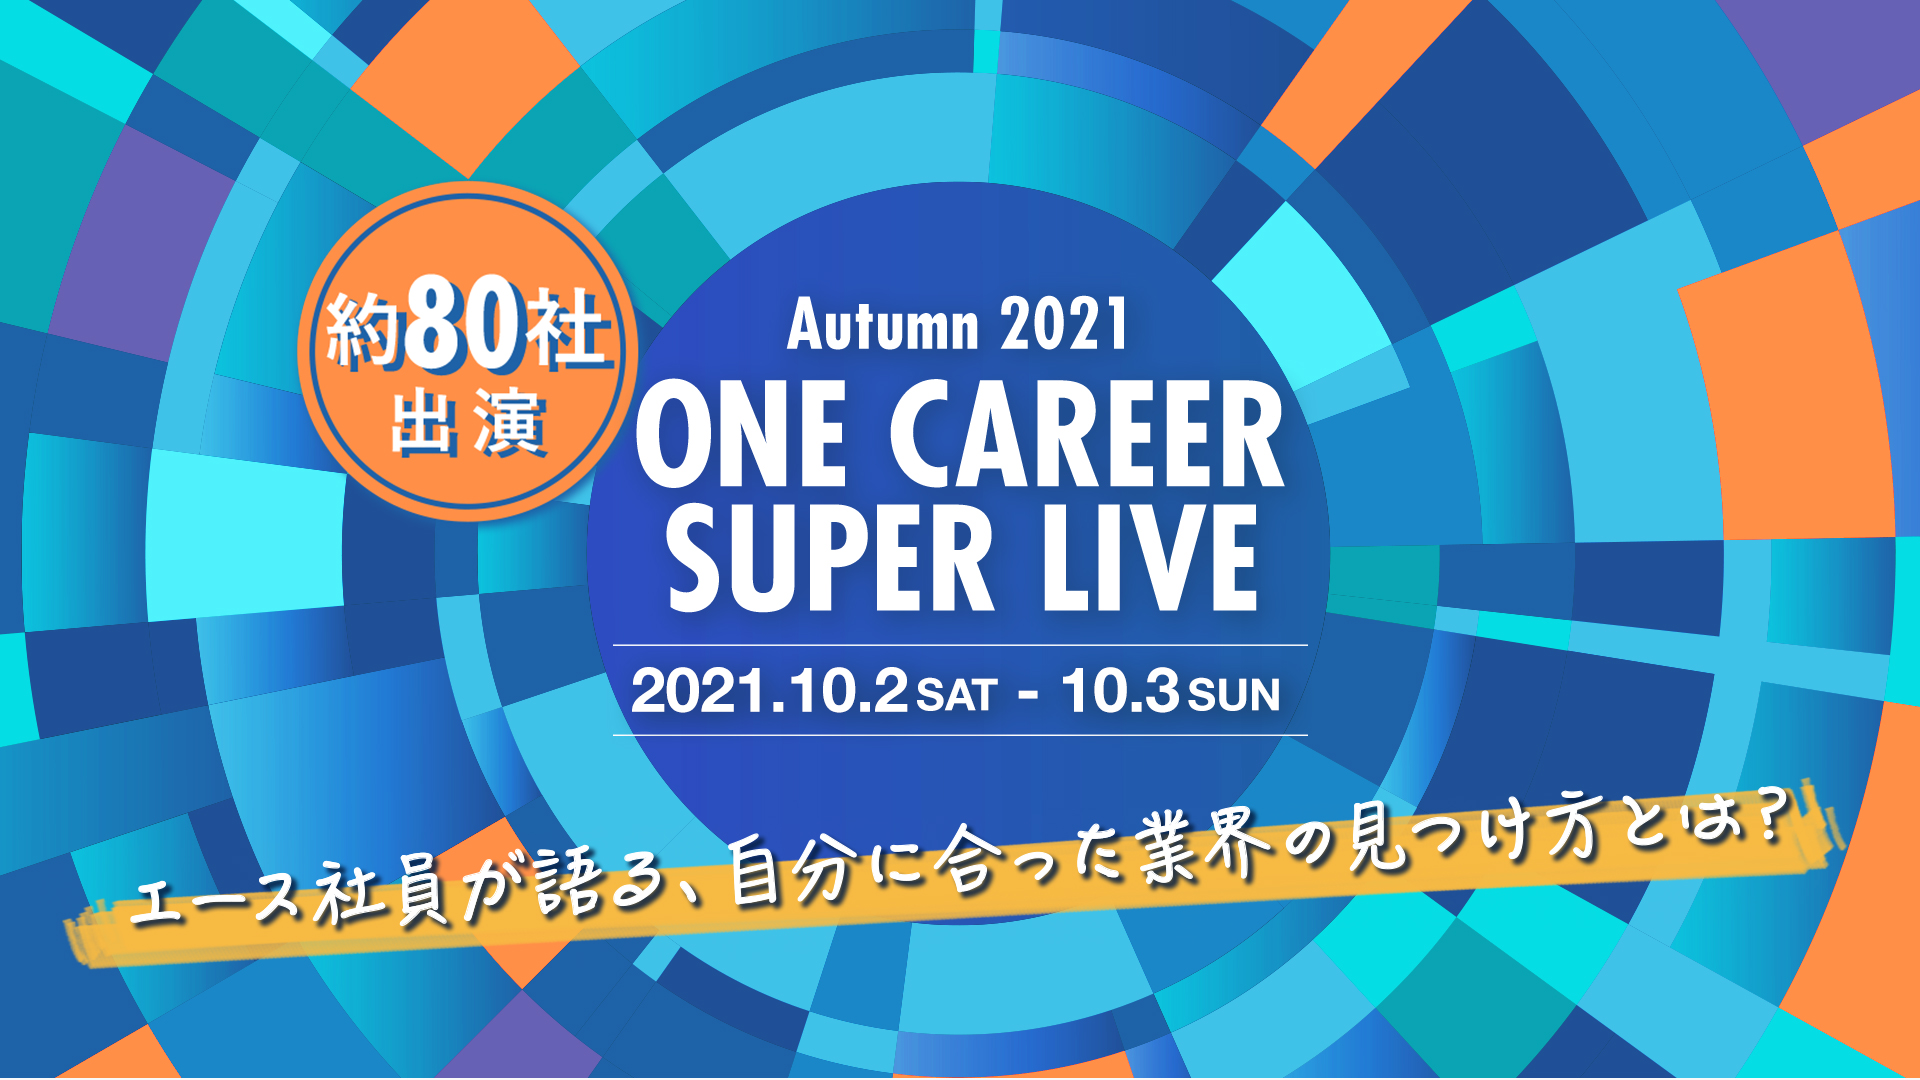 ONE CAREER SUPER LIVE Autumn 2021